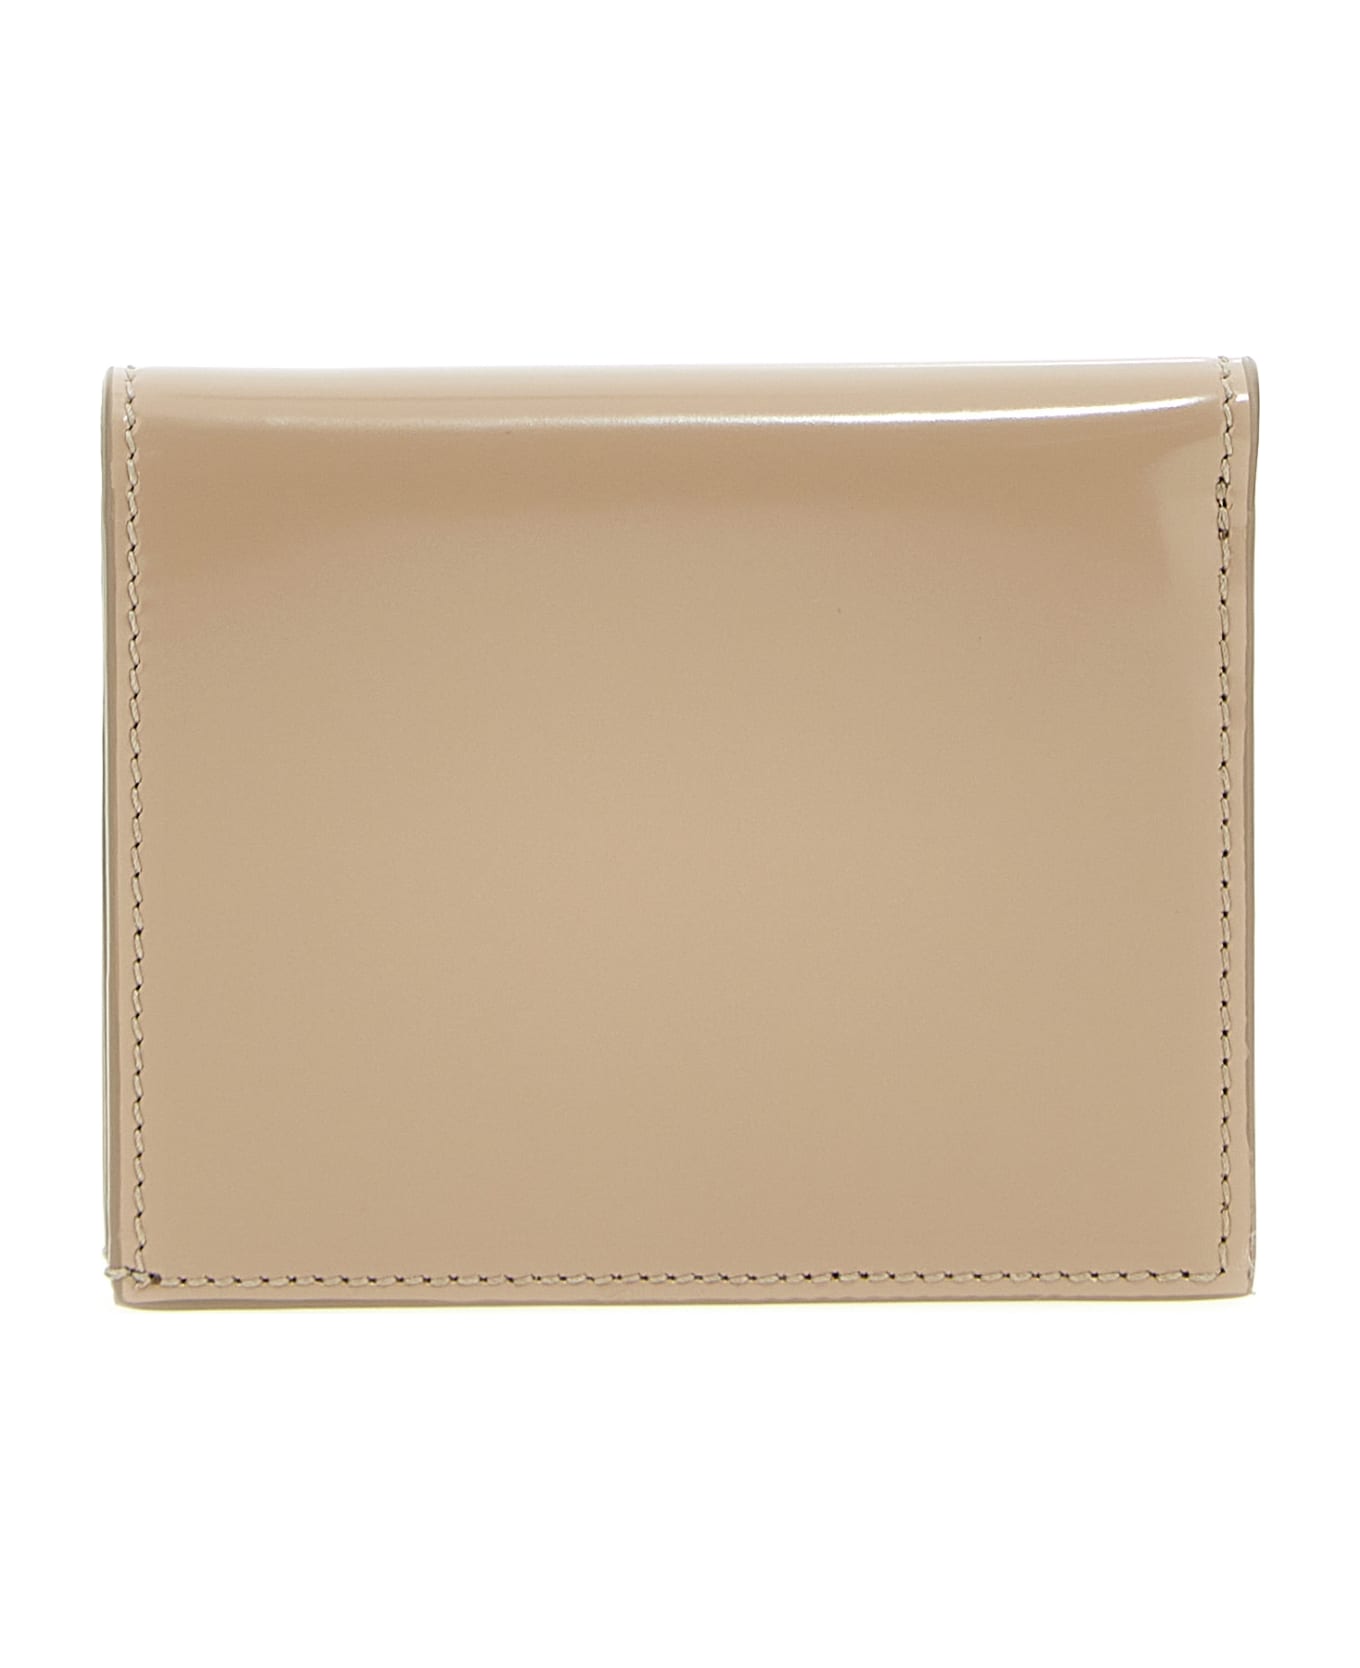 Ferragamo Patent Leather Wallet - Beige